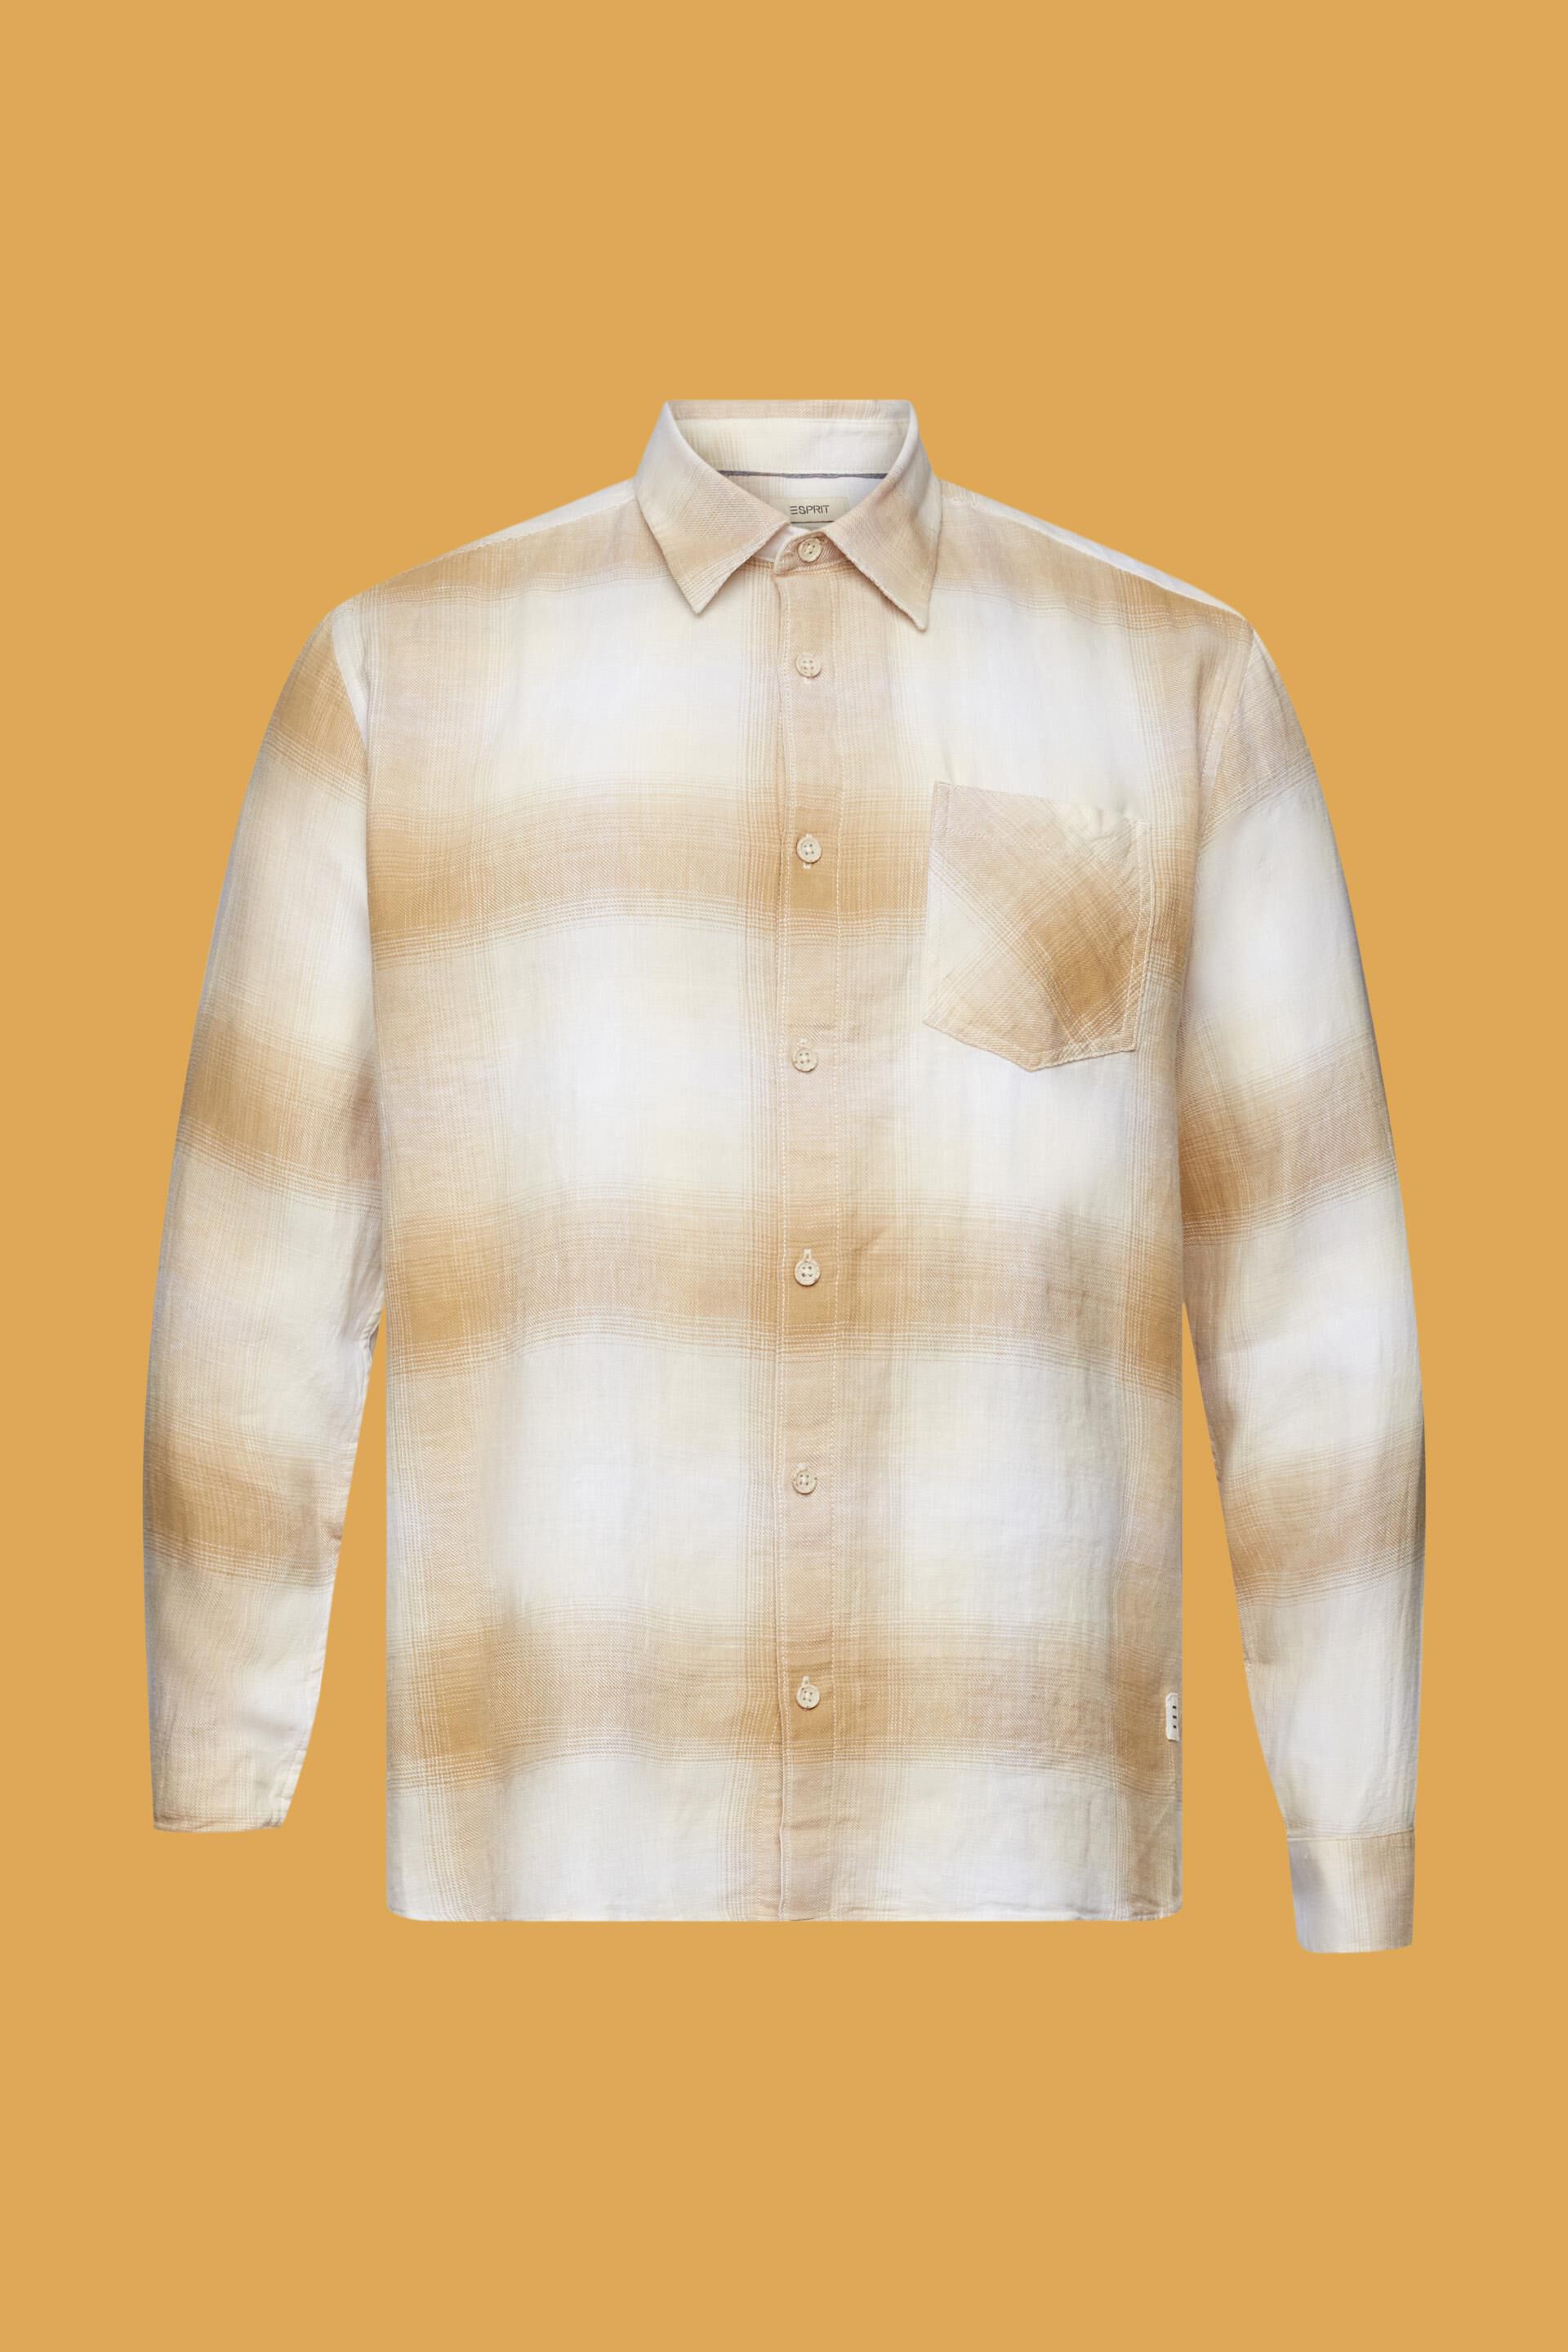 ESPRIT - Cotton and hemp blended checquered tartan shirt at our 